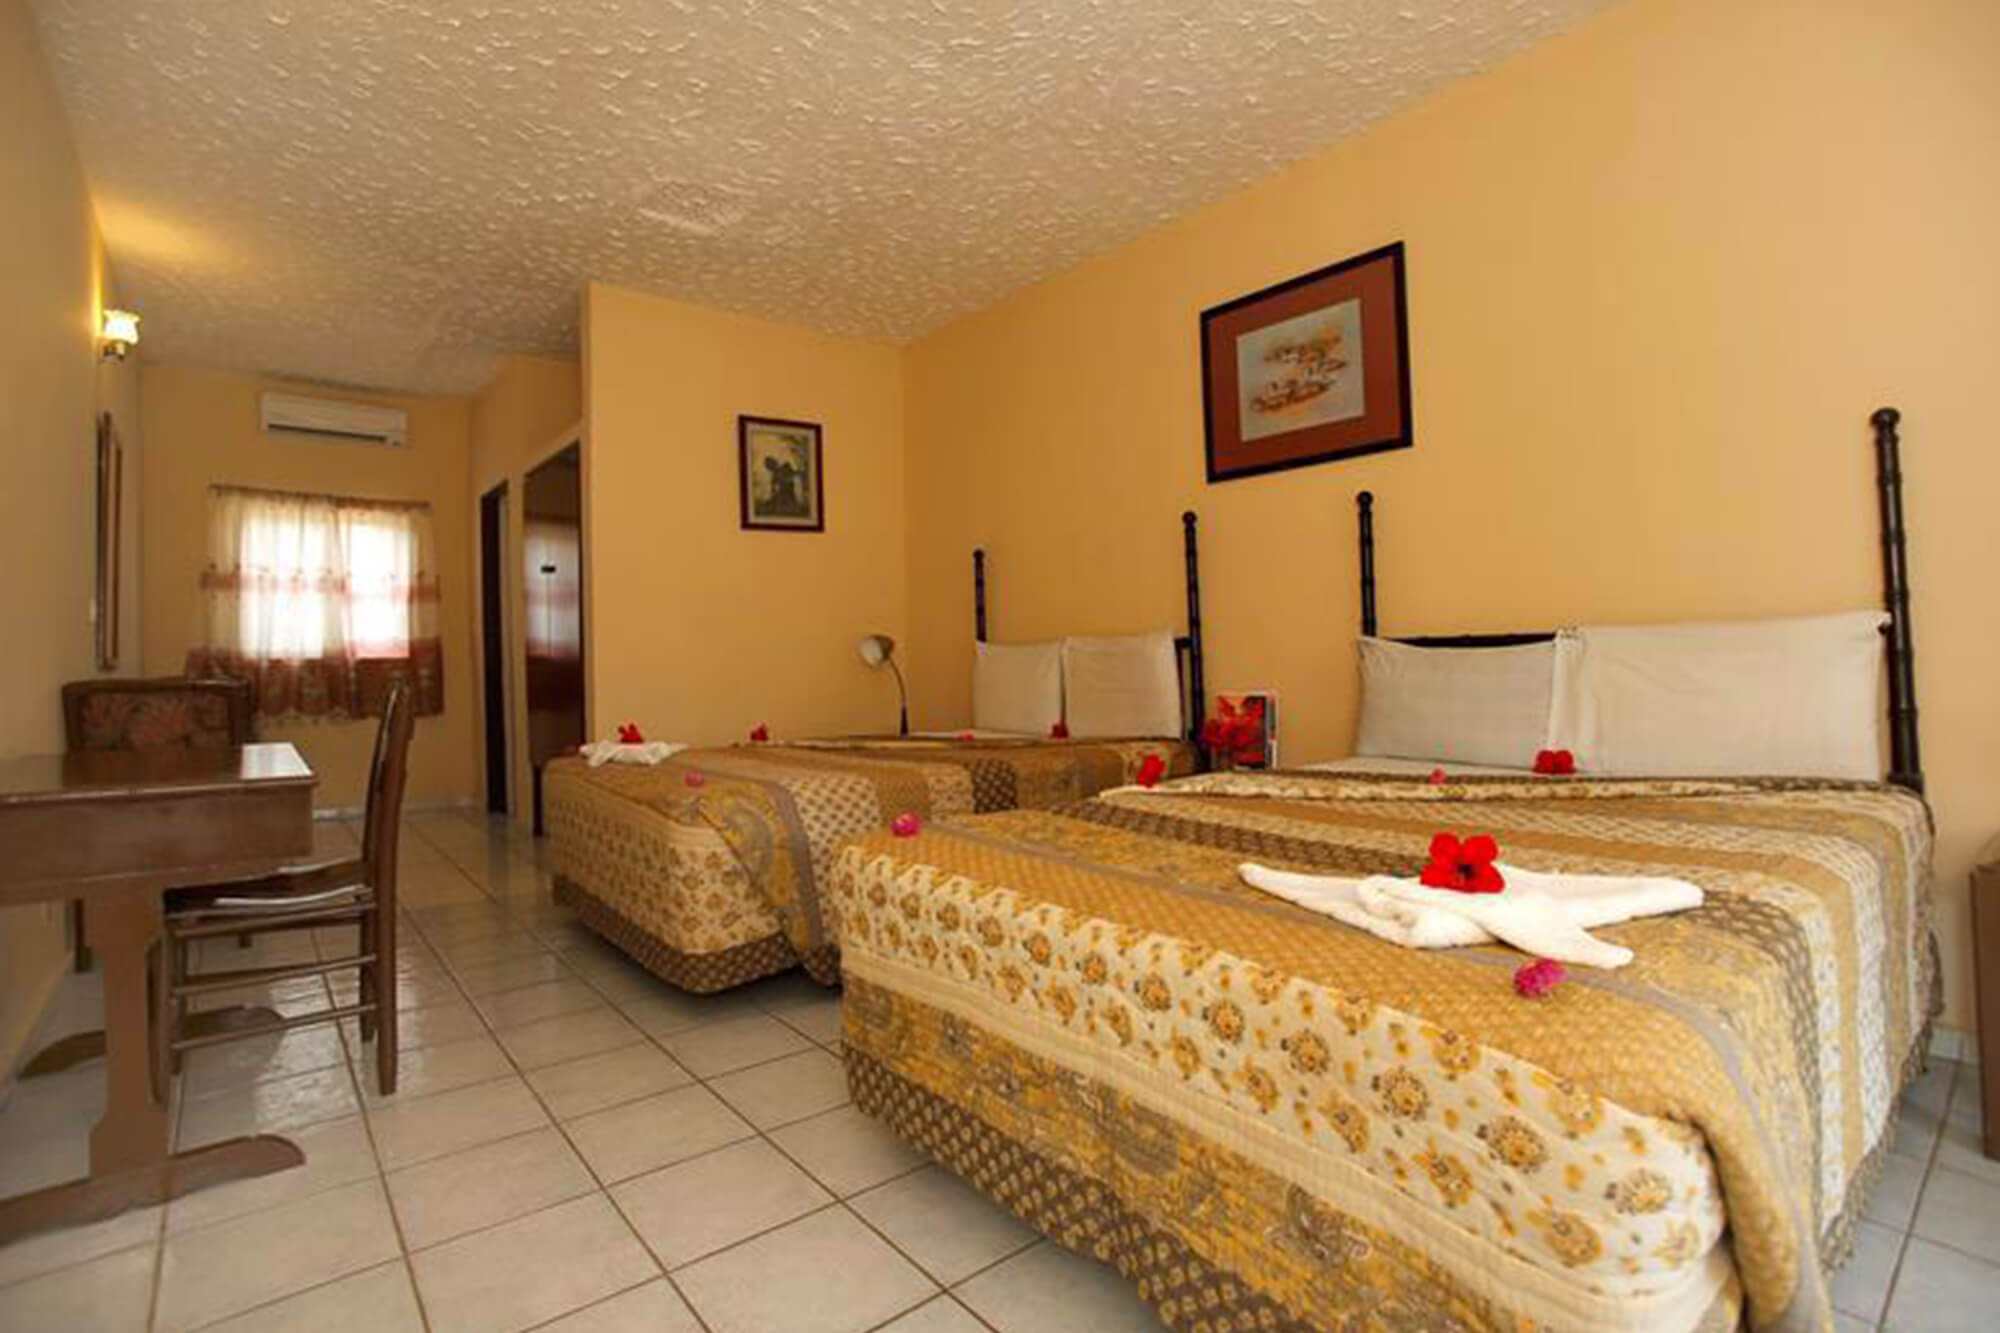 Hotelkamer van het Holiday Beach Club hotel, Kololi, Gambia